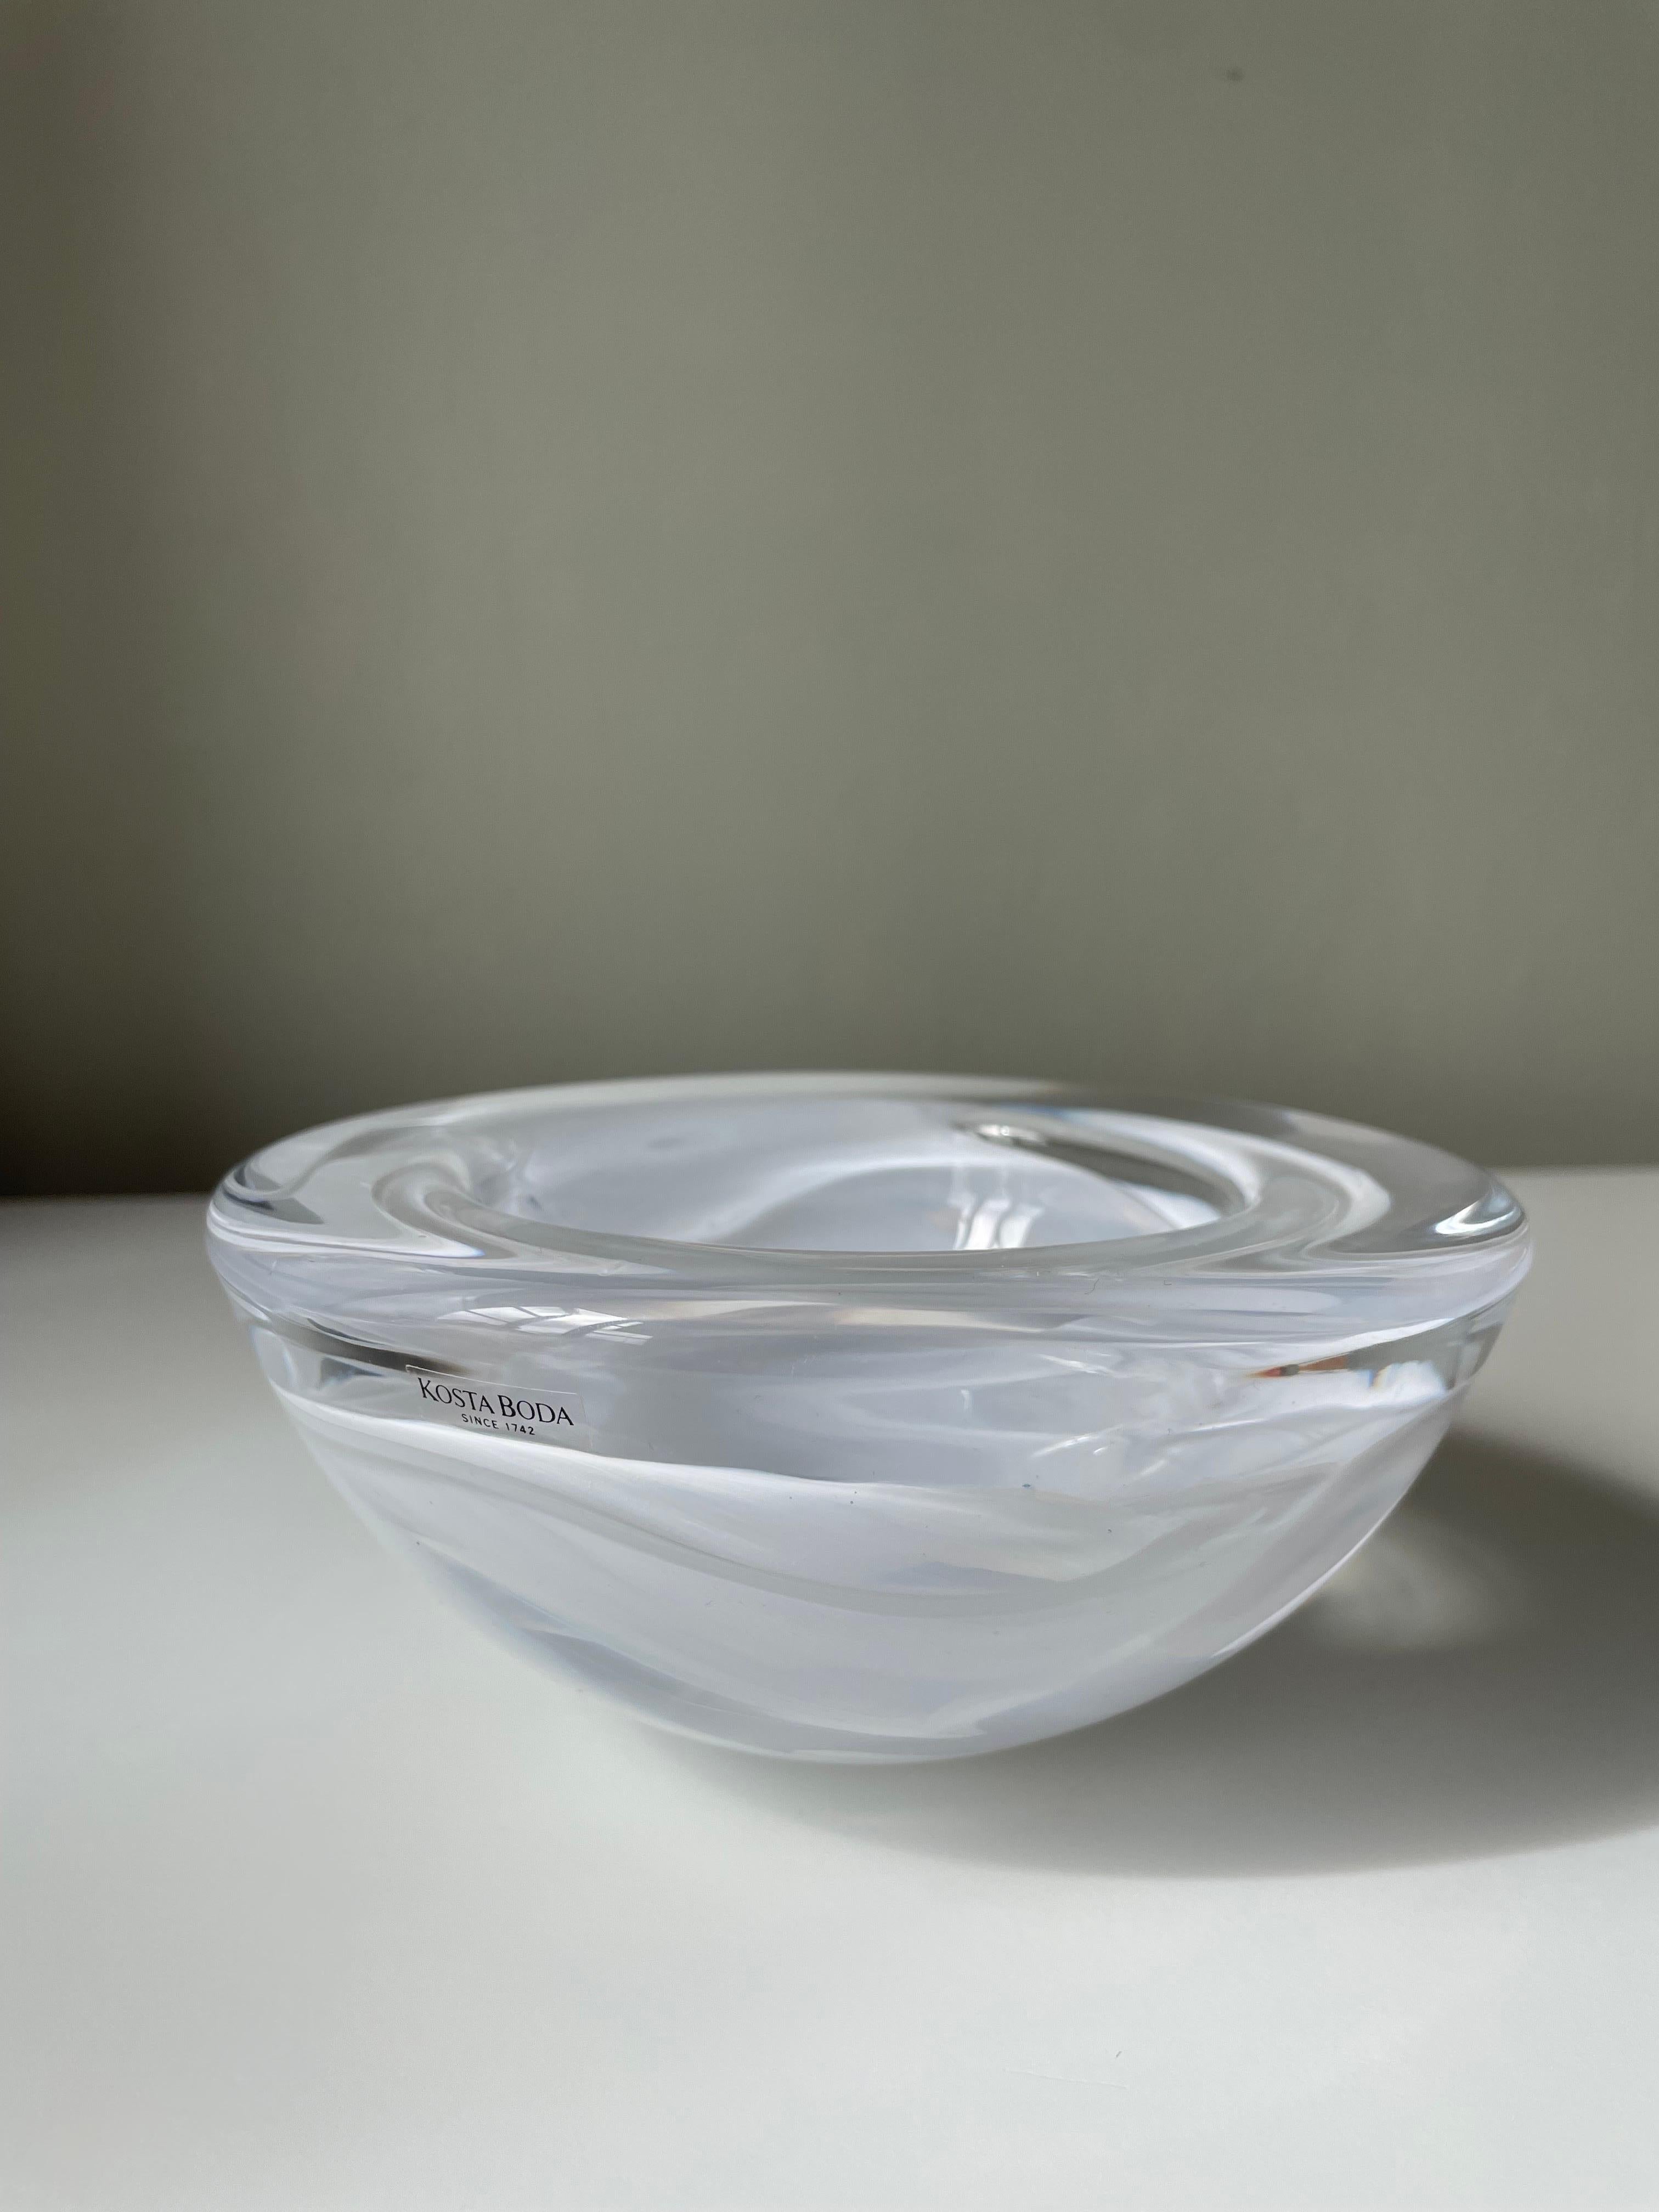 Kosta Boda Swedish Art Glass White Swirl Bowl, 1980s For Sale 12